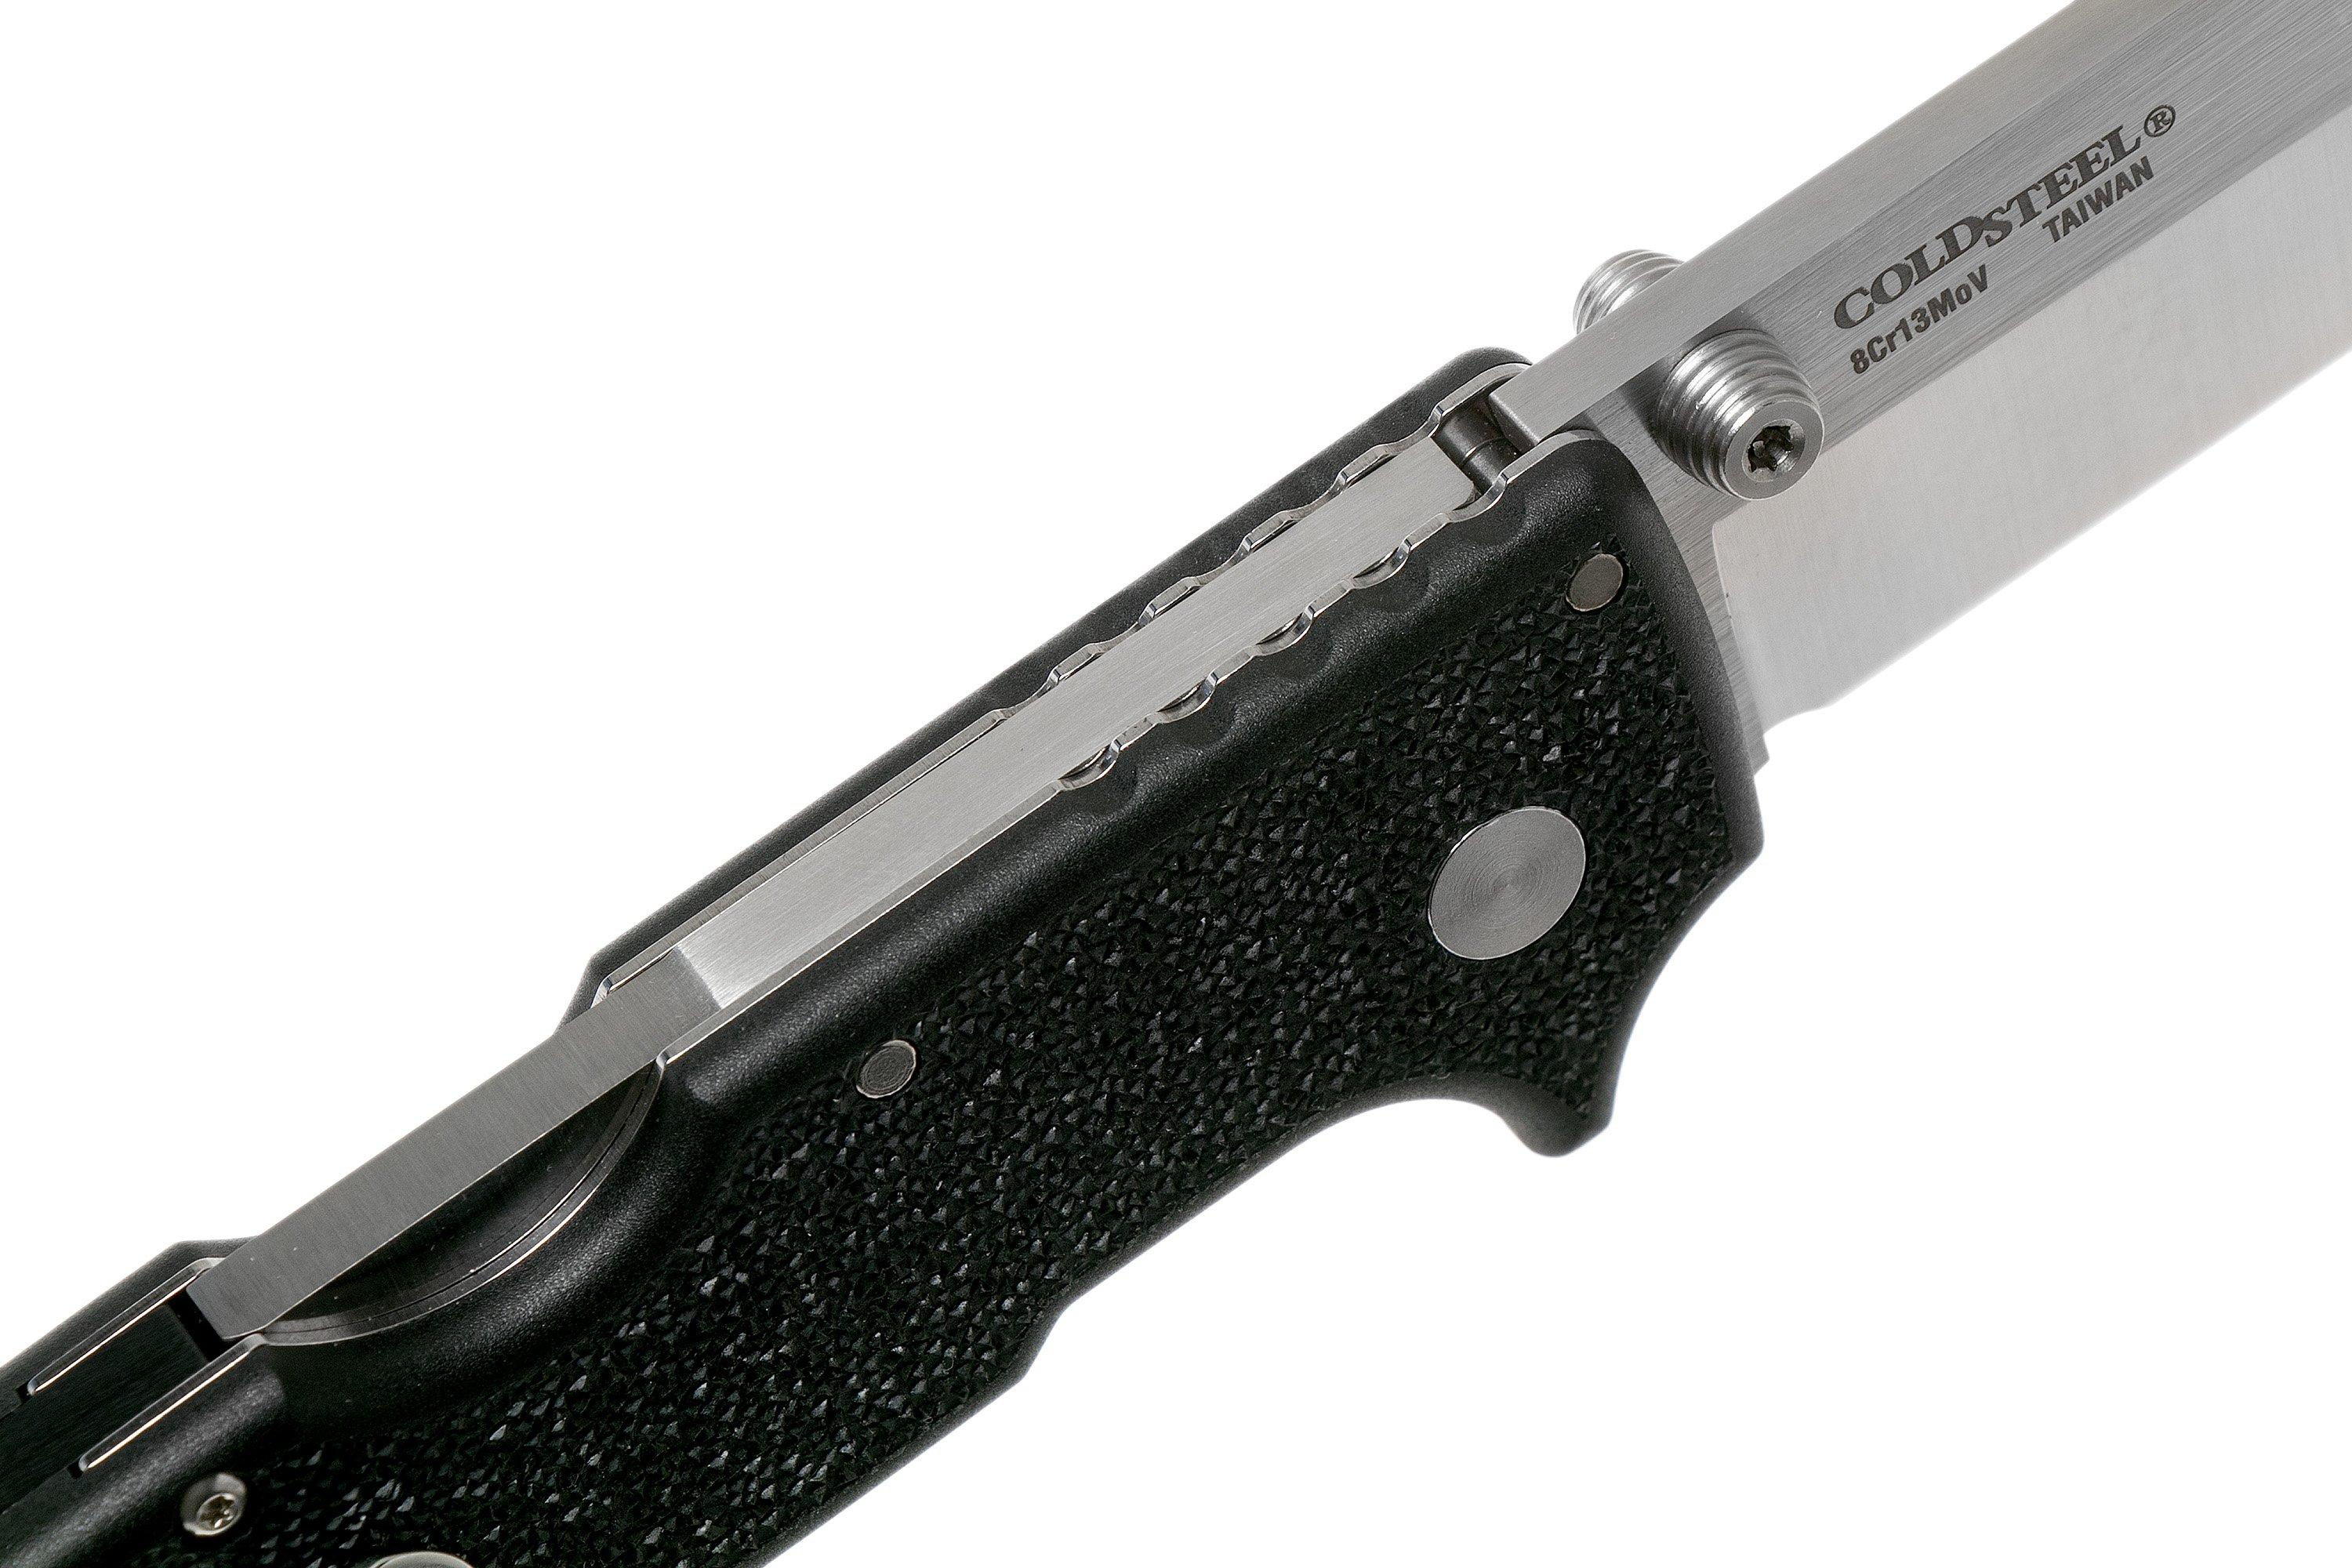 Cold Steel SR1 Lite Blister 4 in Utility Knife